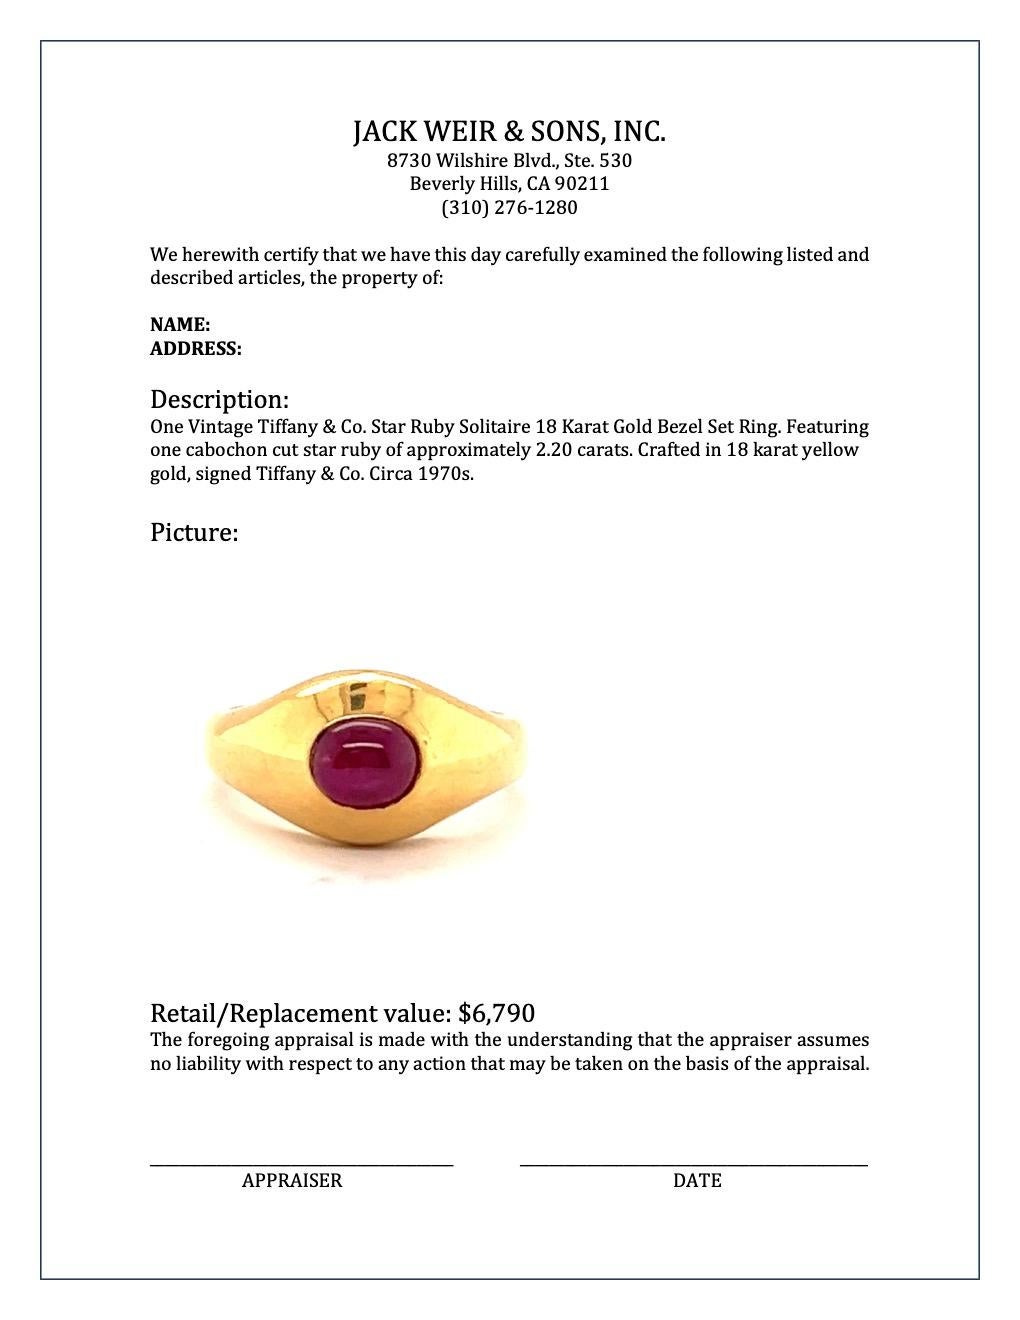 Vintage Tiffany & Co. 2.20ct Star Ruby Solitaire 18 Karat Gold Bezel Set Ring 1